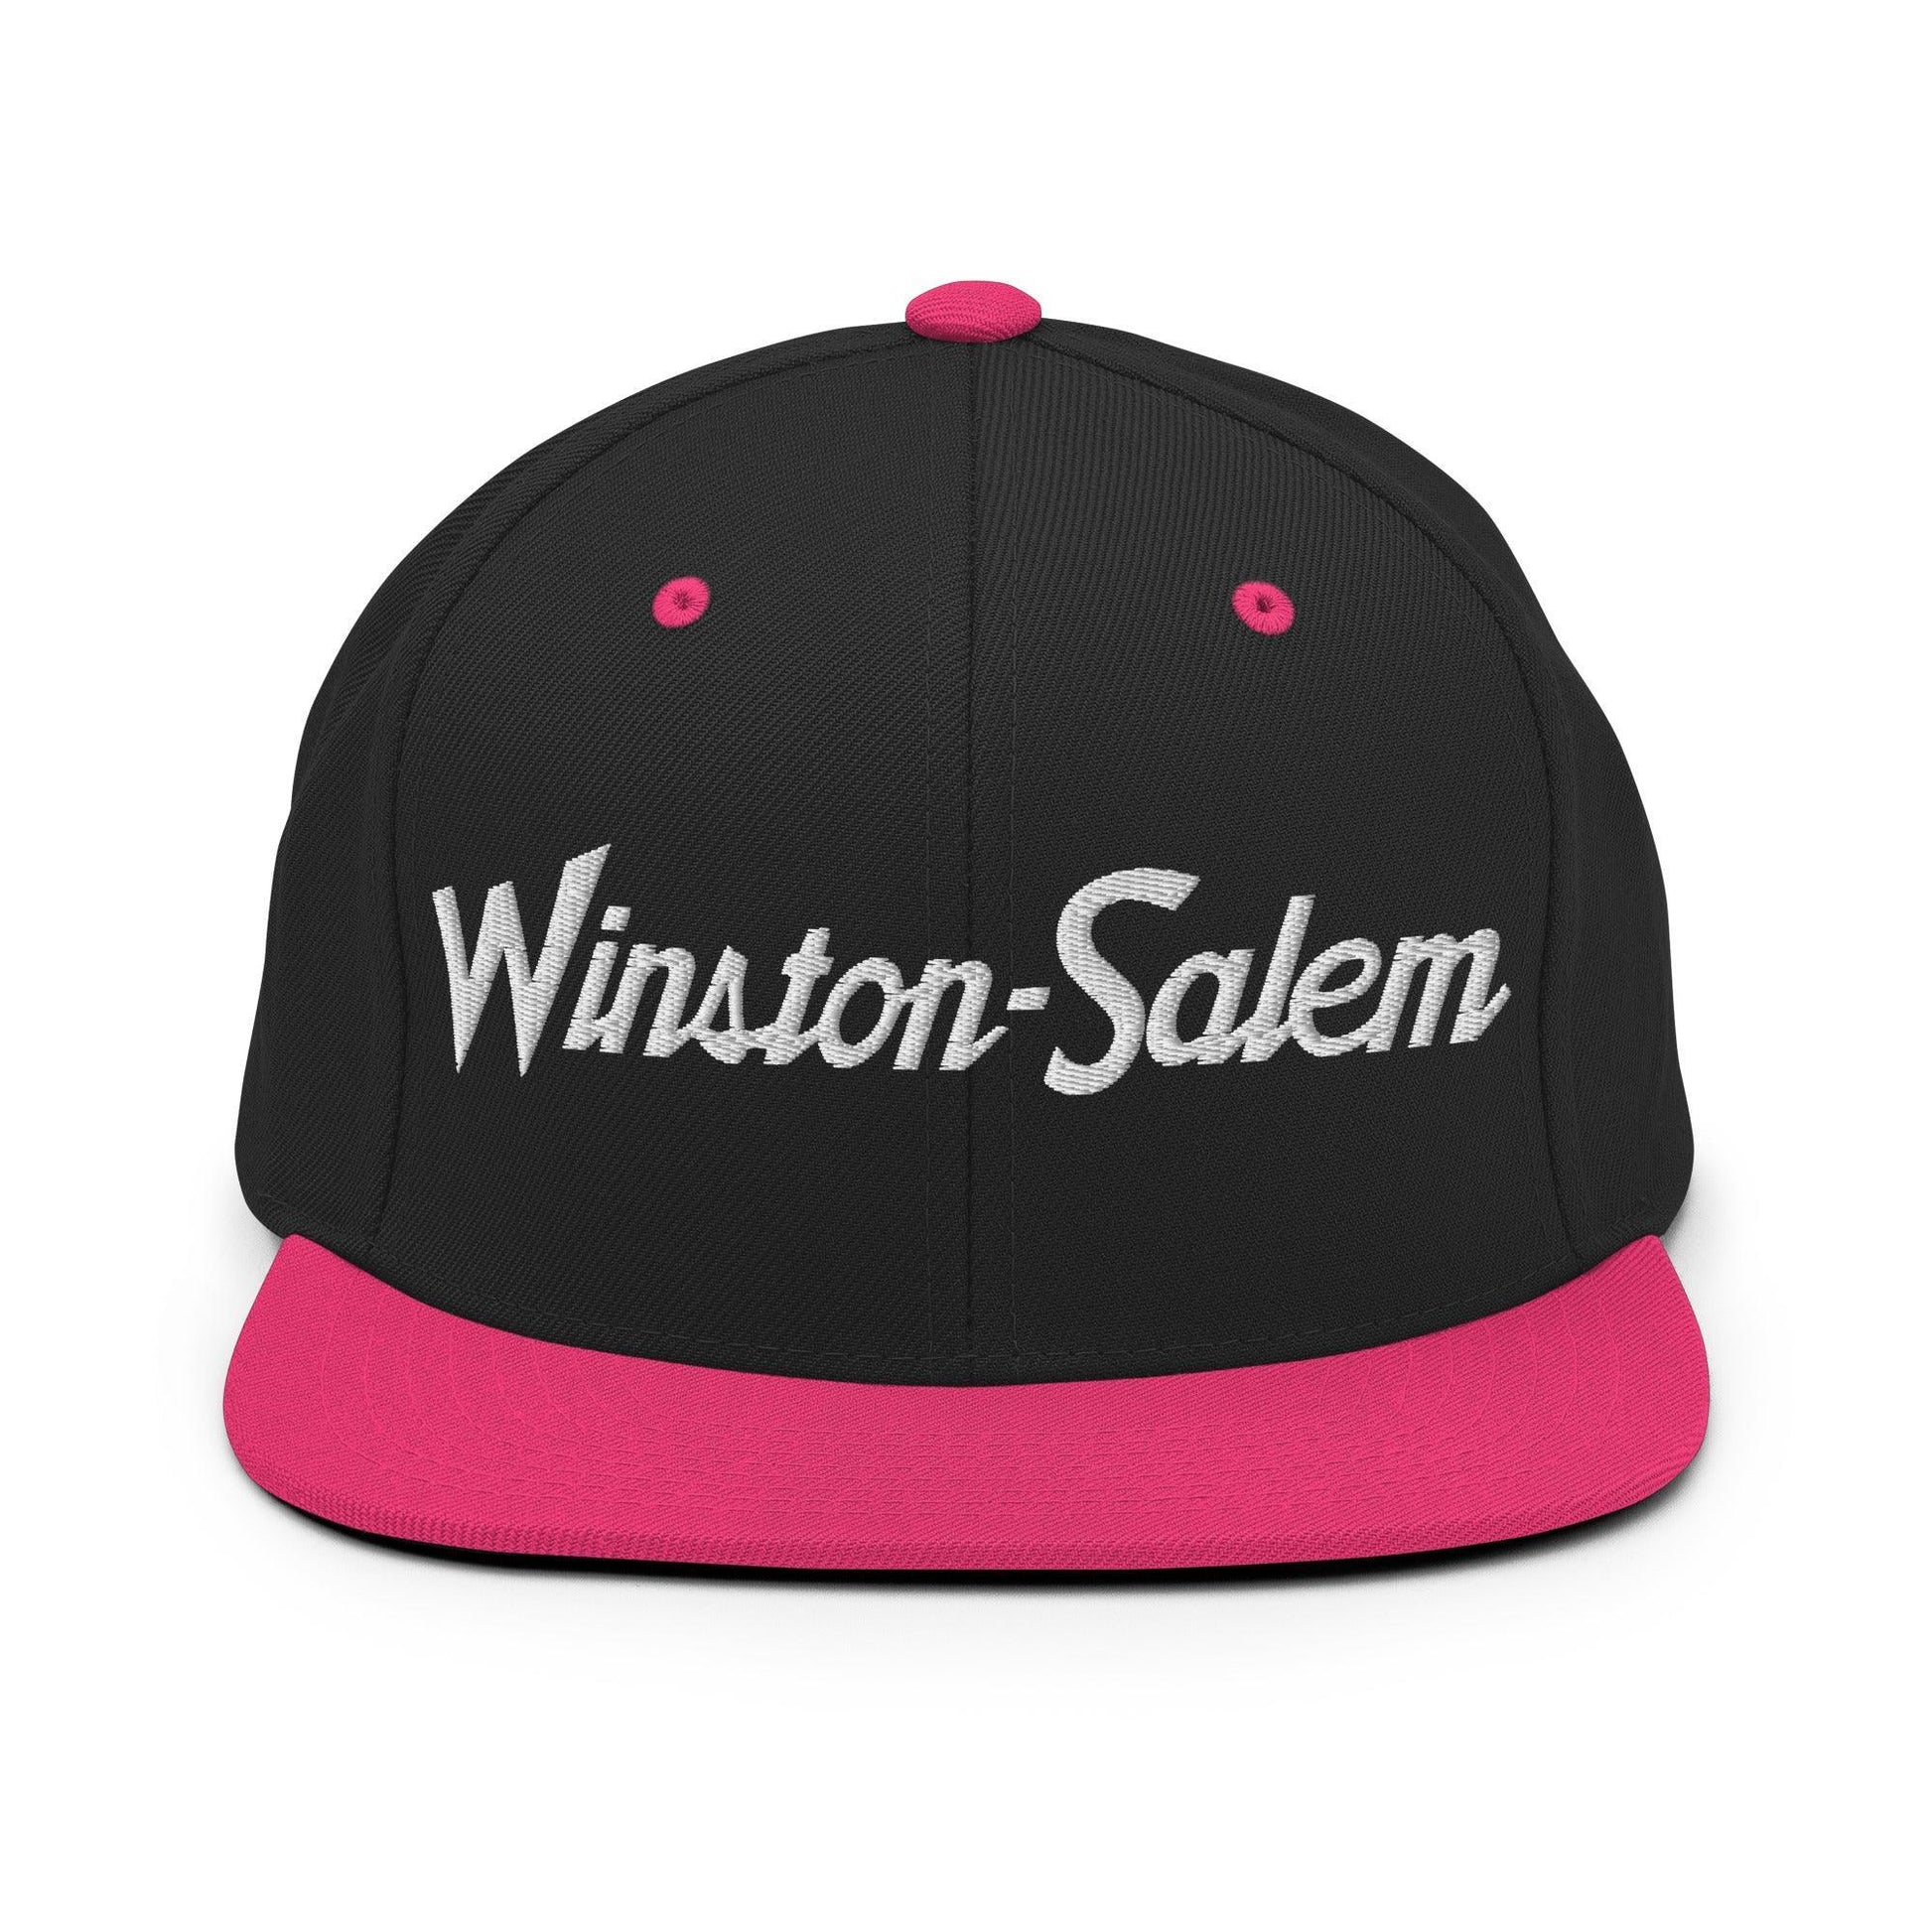 Winston-Salem Script Snapback Hat Black/ Neon Pink